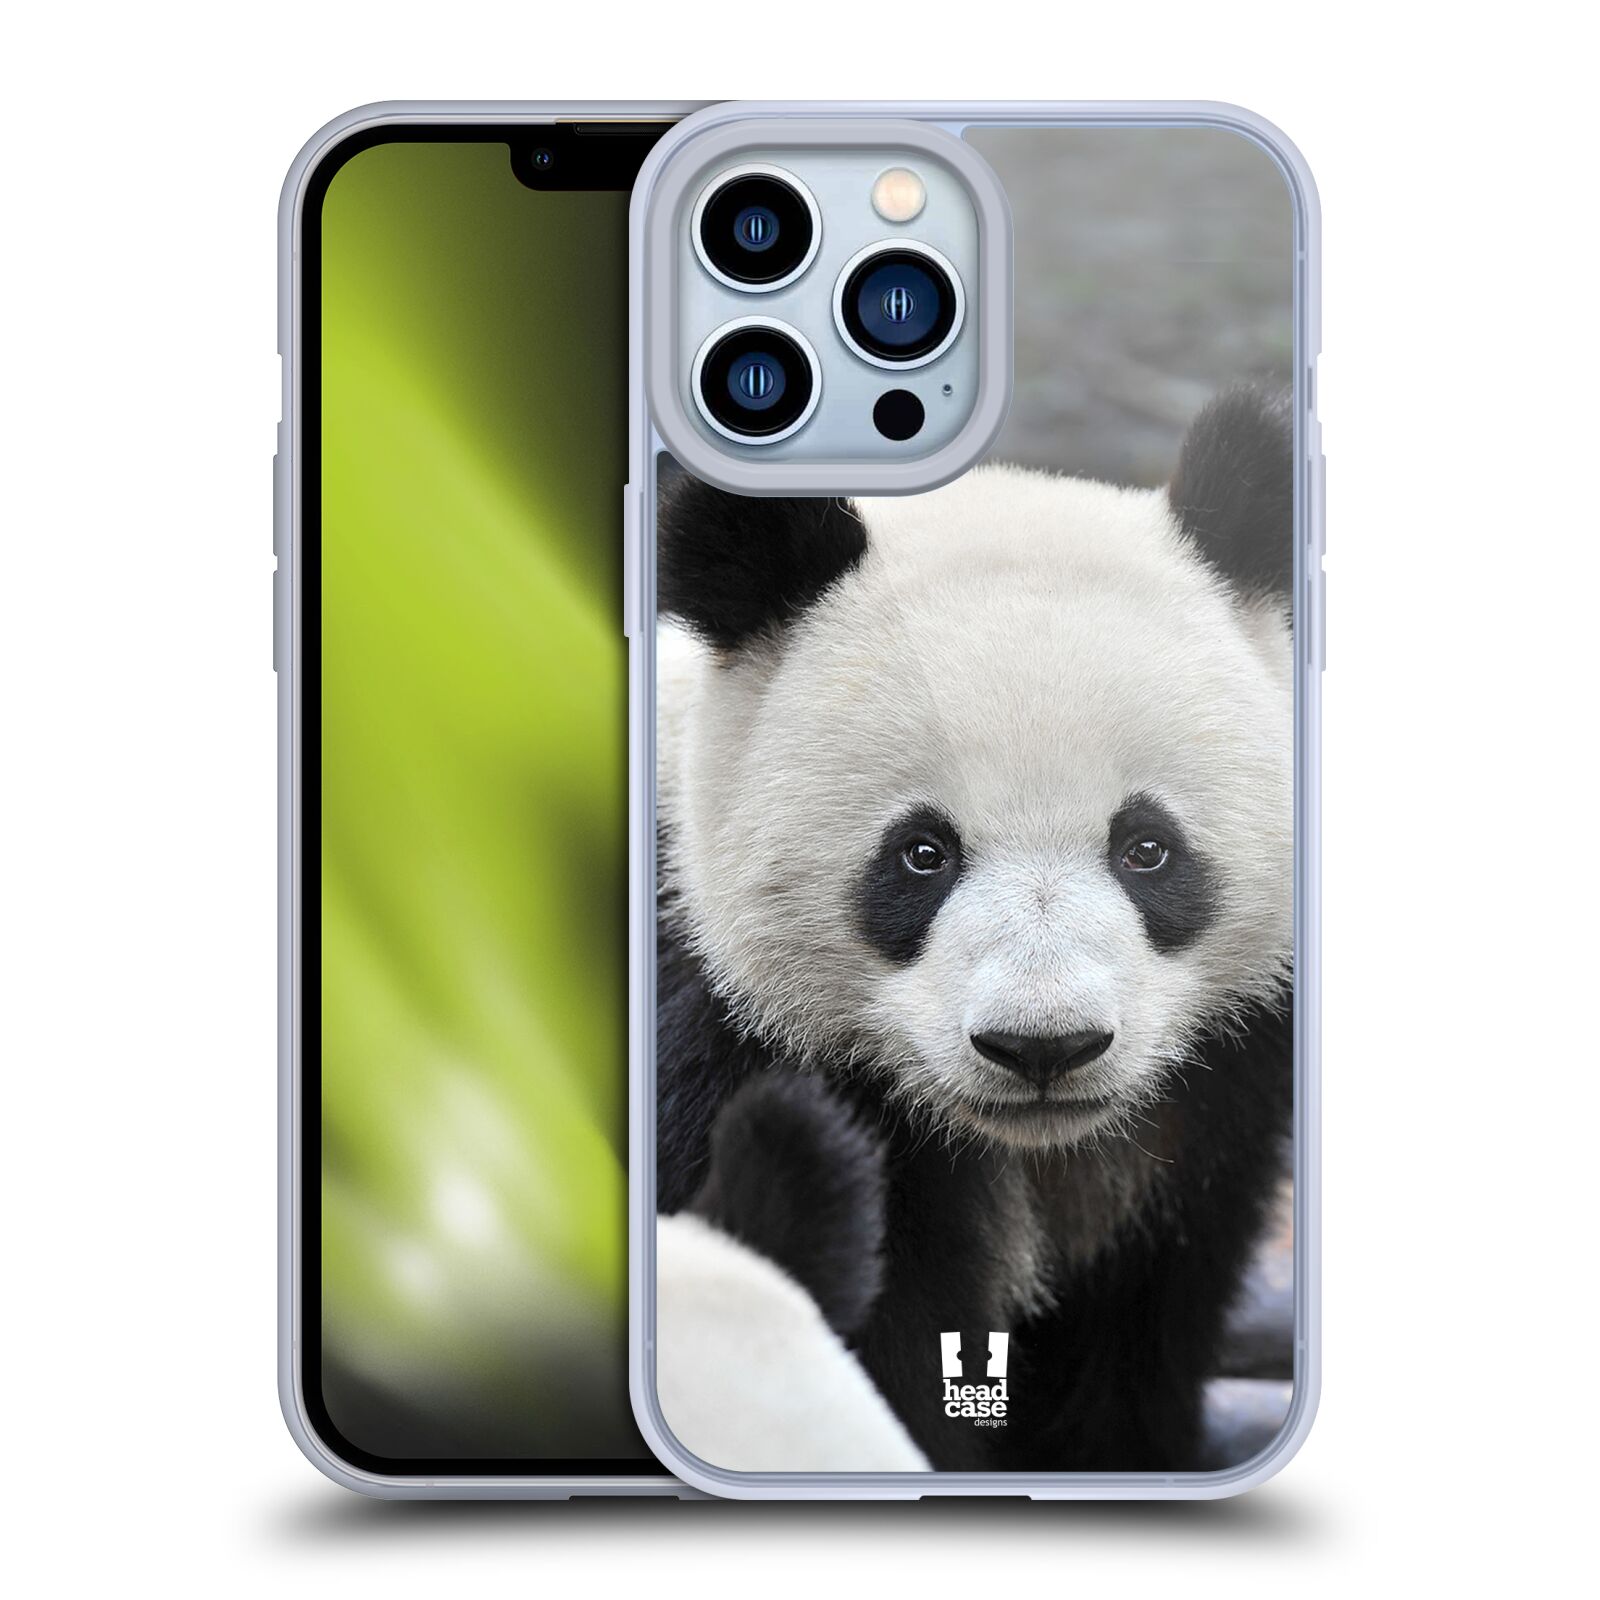 Plastový obal HEAD CASE na mobil Apple Iphone 13 PRO MAX vzor Divočina, Divoký život a zvířata foto MEDVĚD PANDA